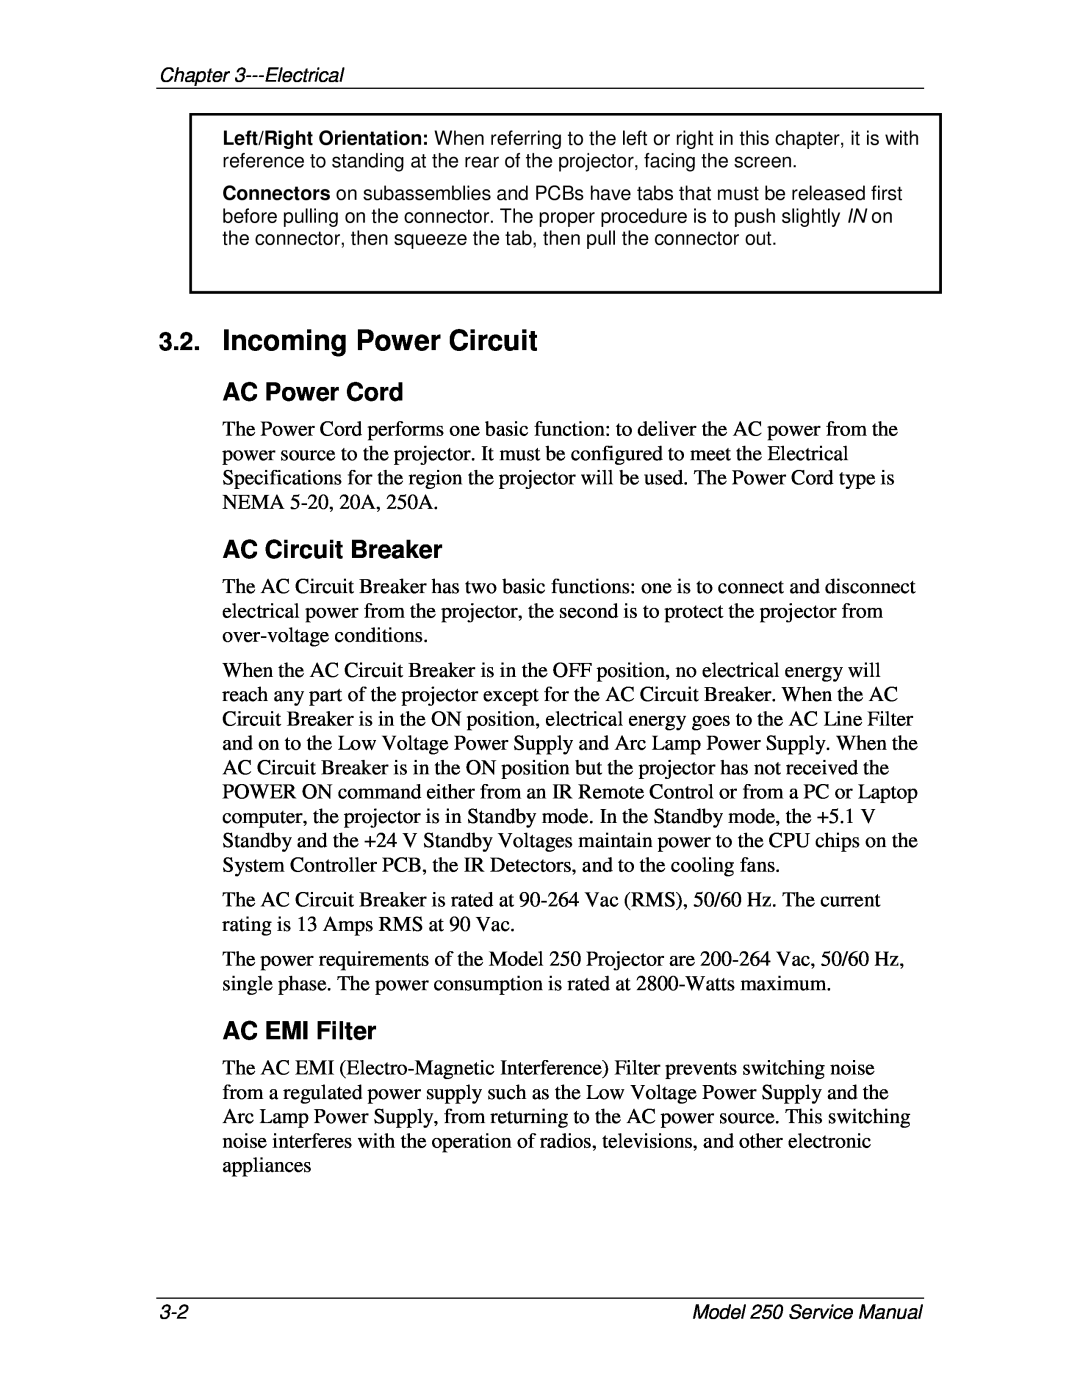 JVC 250 service manual Incoming Power Circuit, AC Power Cord, AC Circuit Breaker, AC EMI Filter 